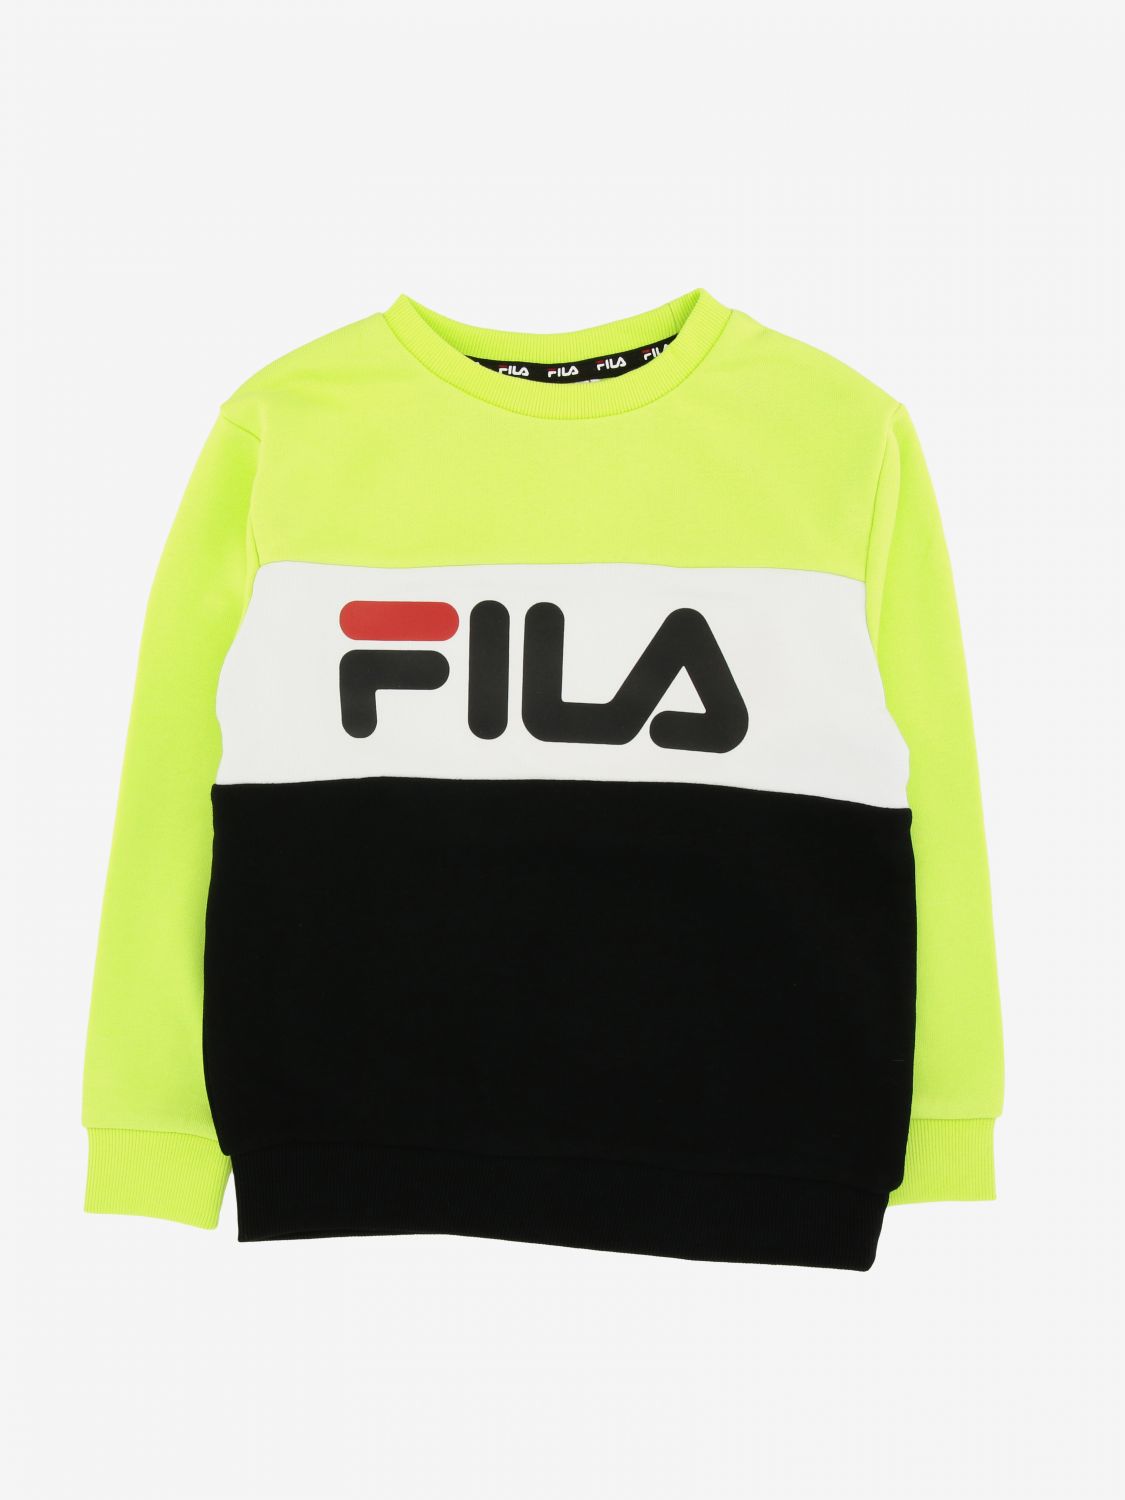 Bedrift Syge person Belyse Fila Outlet: Sweater kids | Sweater Fila Kids Black | Sweater Fila 688093  GIGLIO.COM